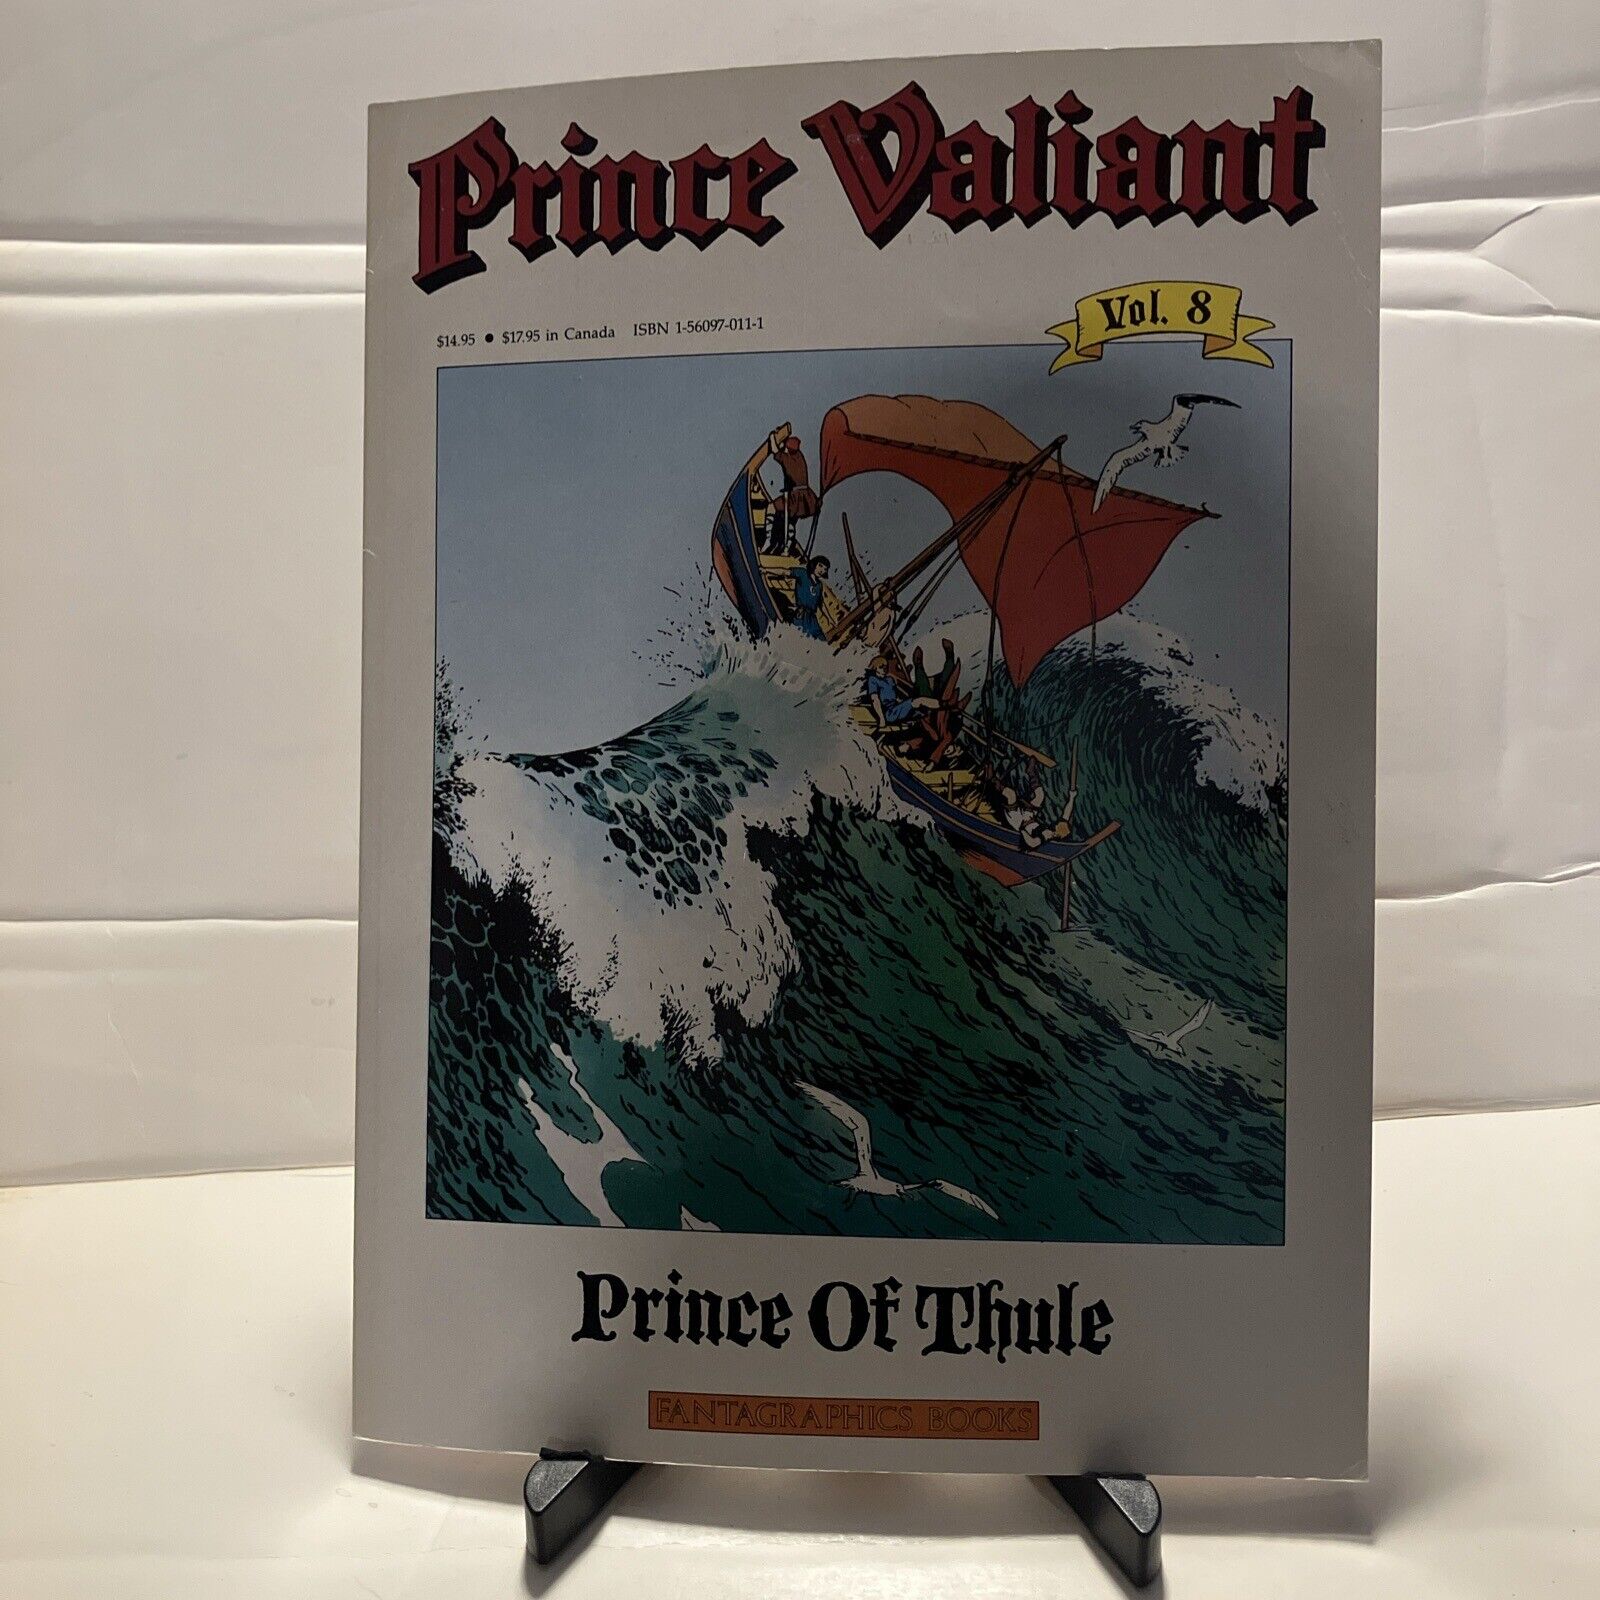 Prince Valiant #8 (Fantagraphics Books, January 1990)